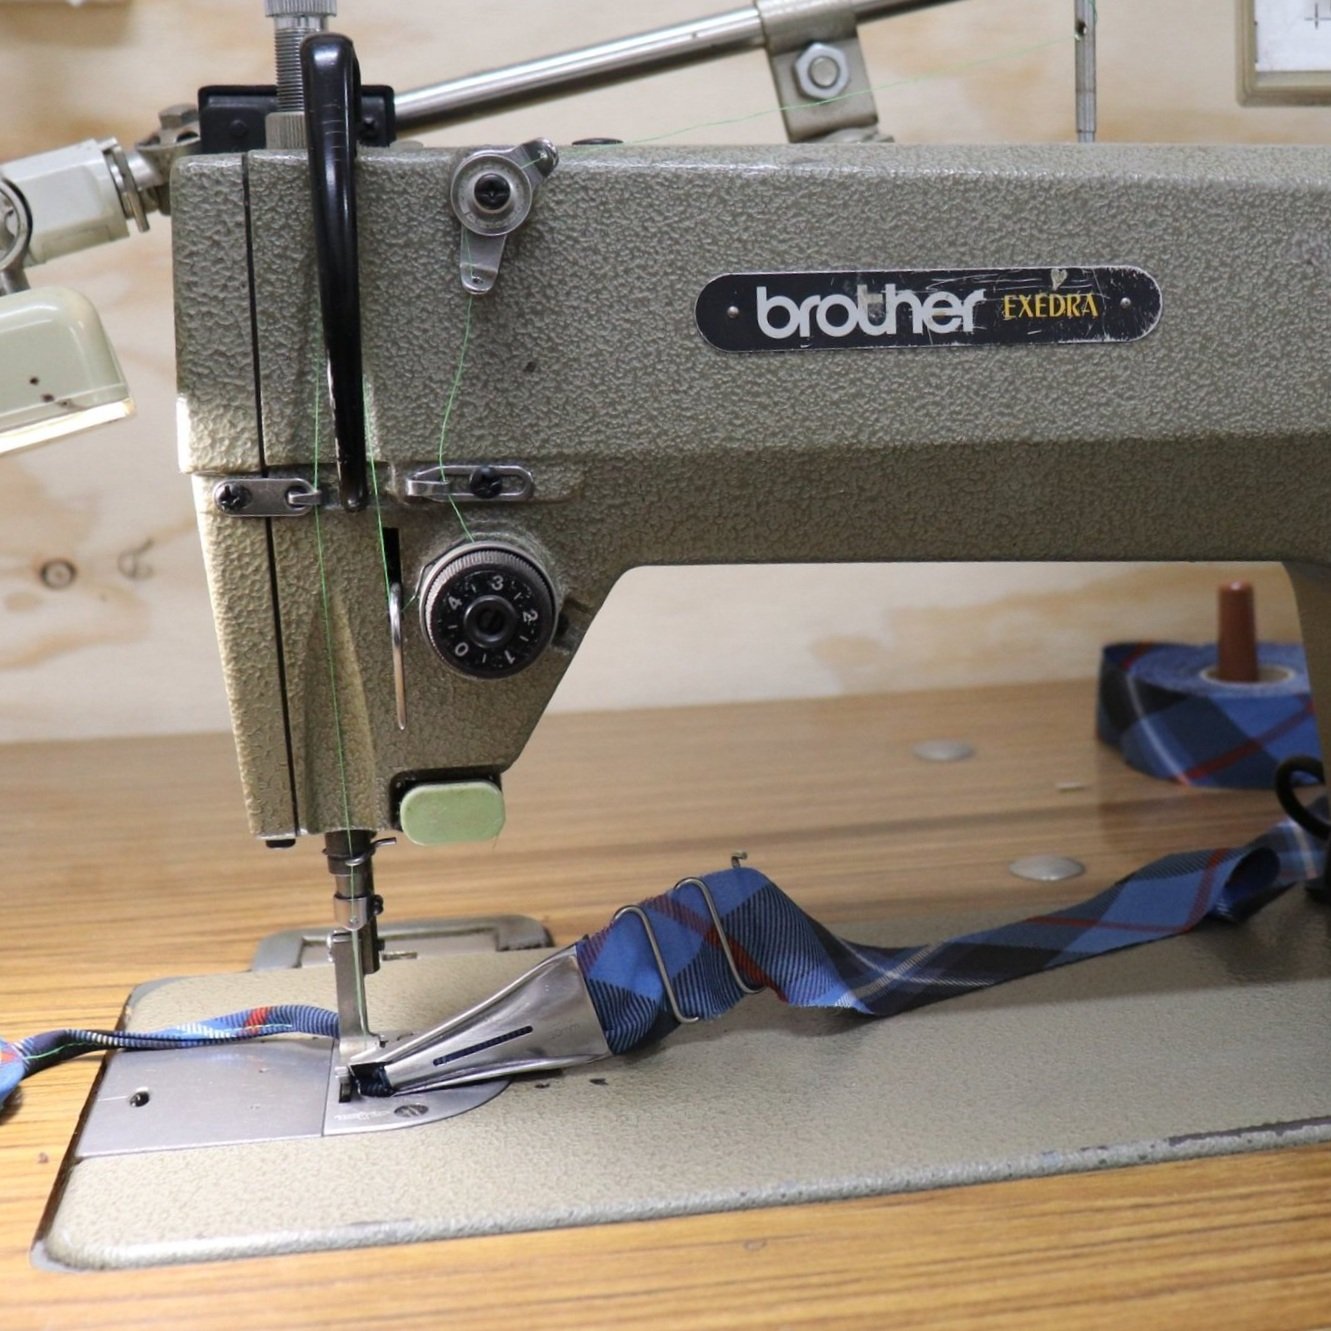 Straight Stitch Machine with Binding Folder Attachment